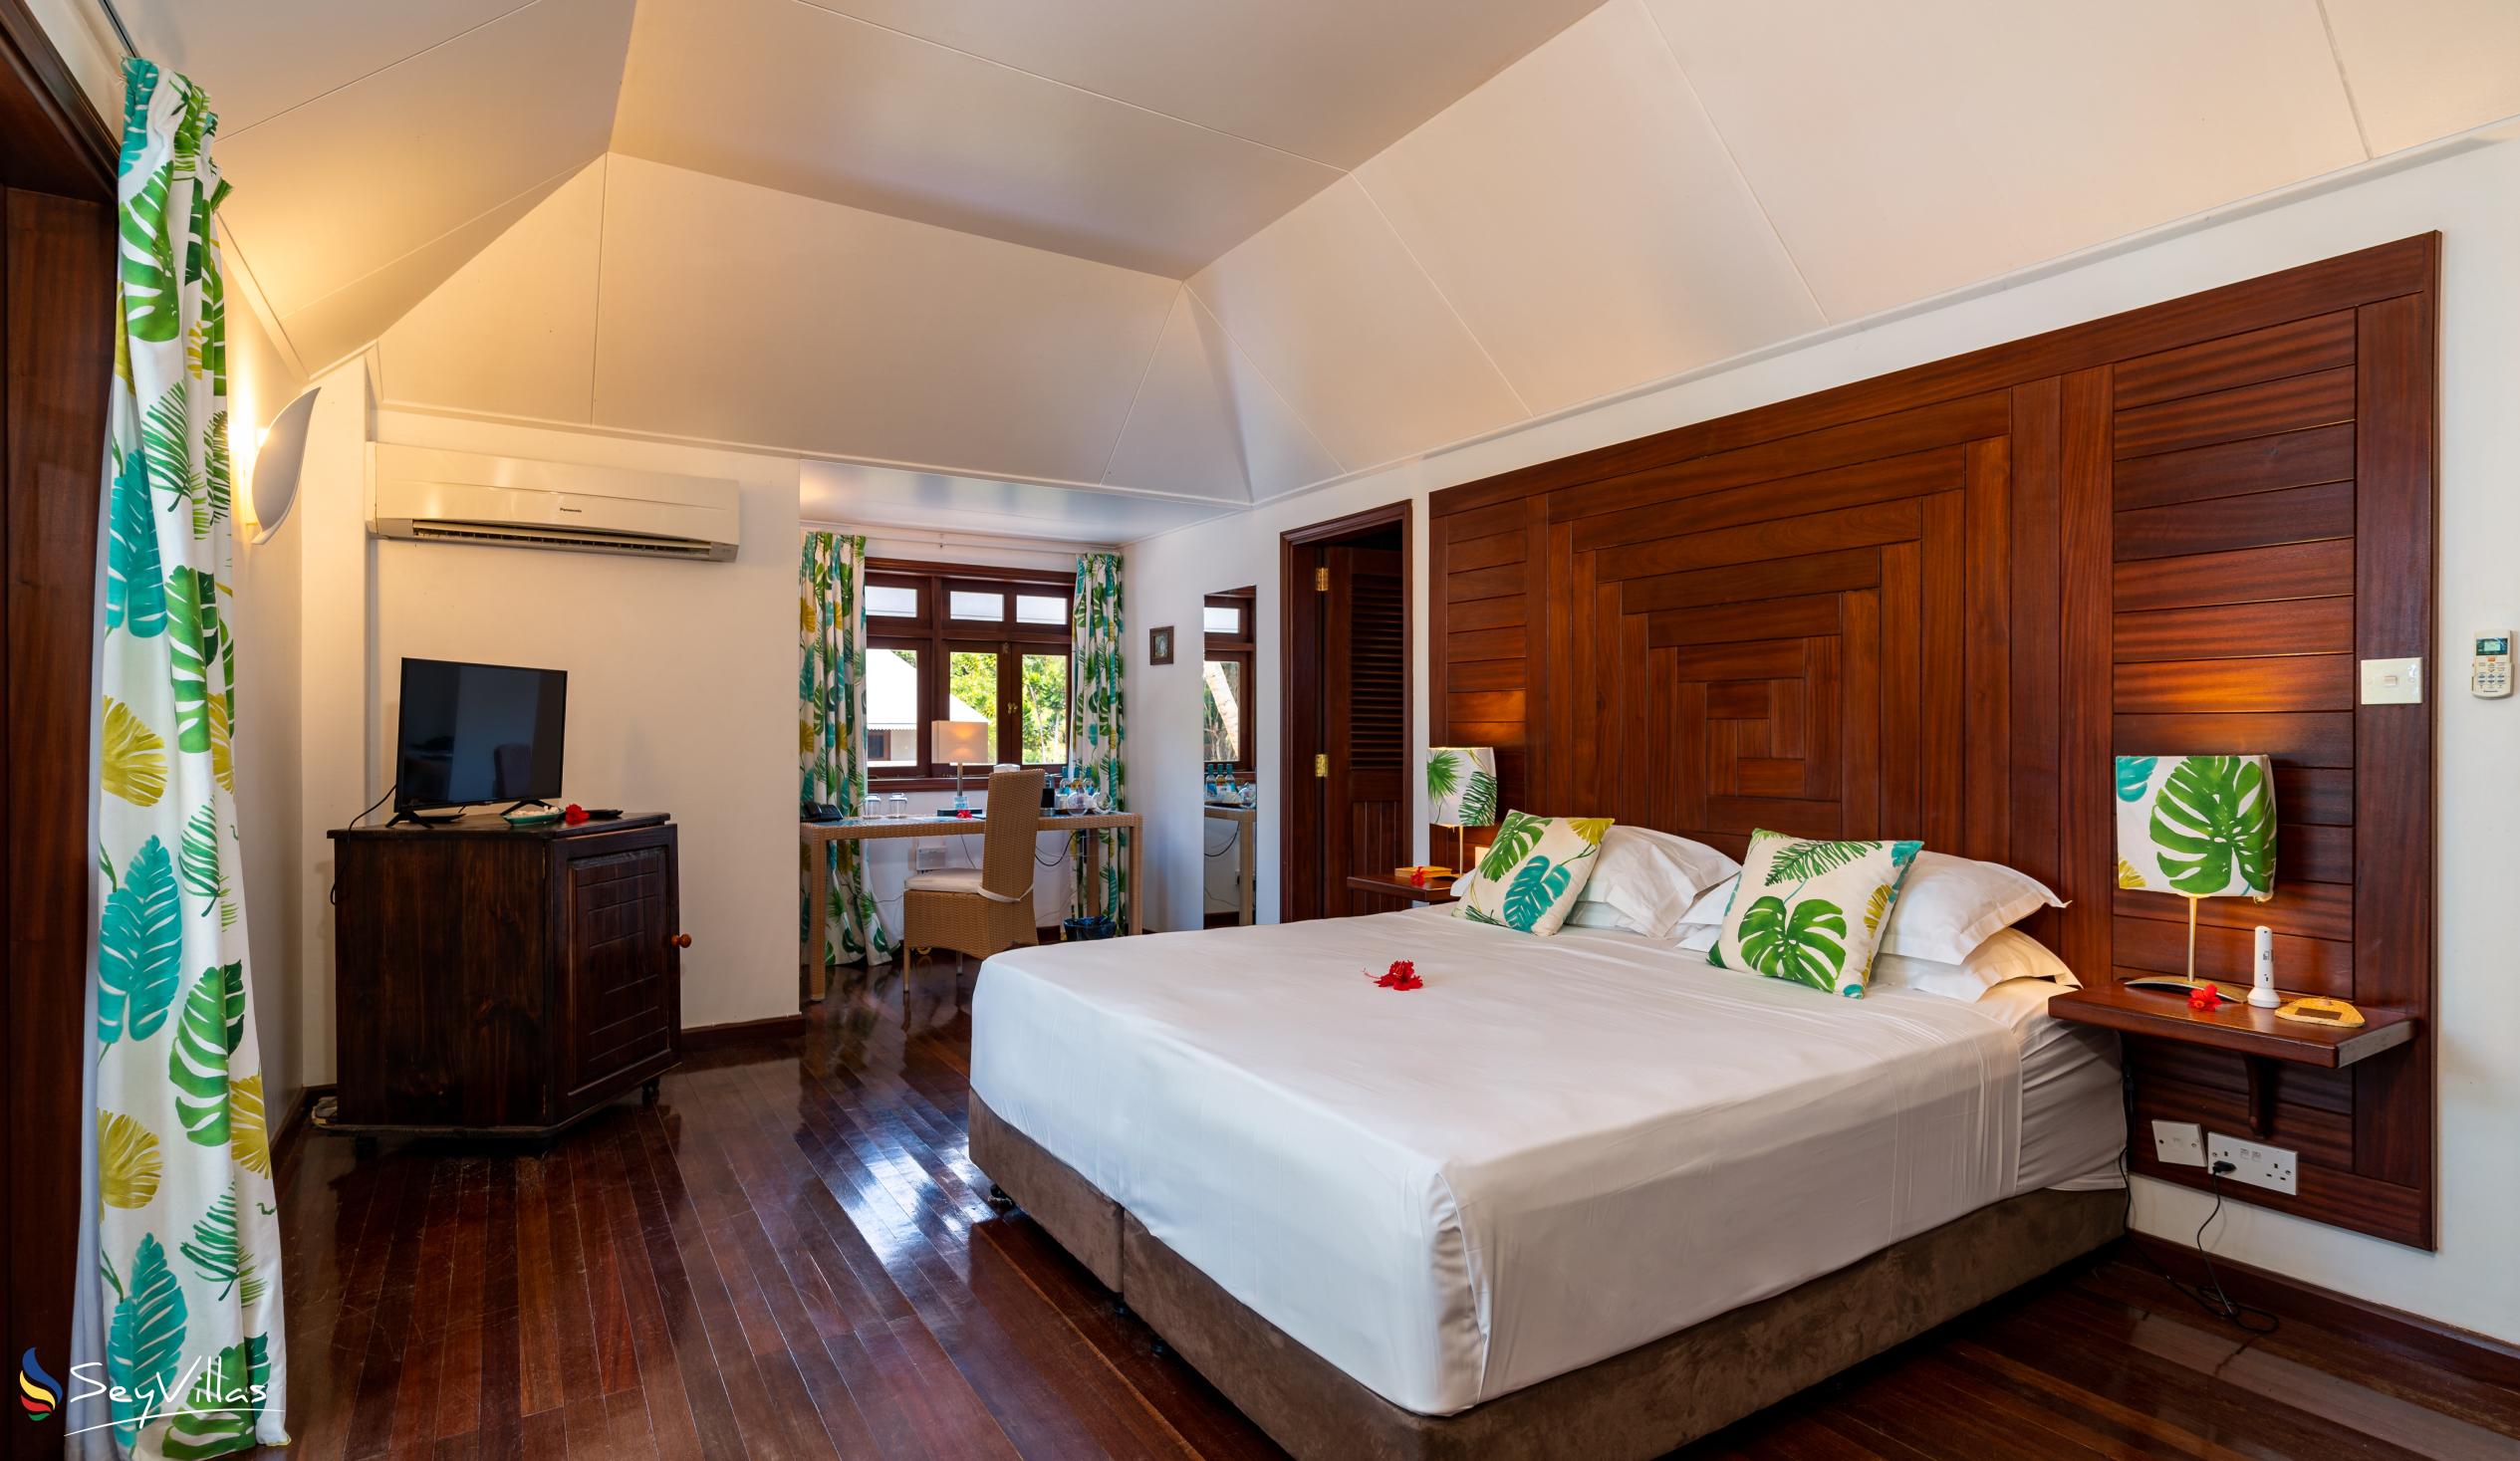 Photo 90: La Belle Tortue - Lodge Room with Balcony - Silhouette Island (Seychelles)